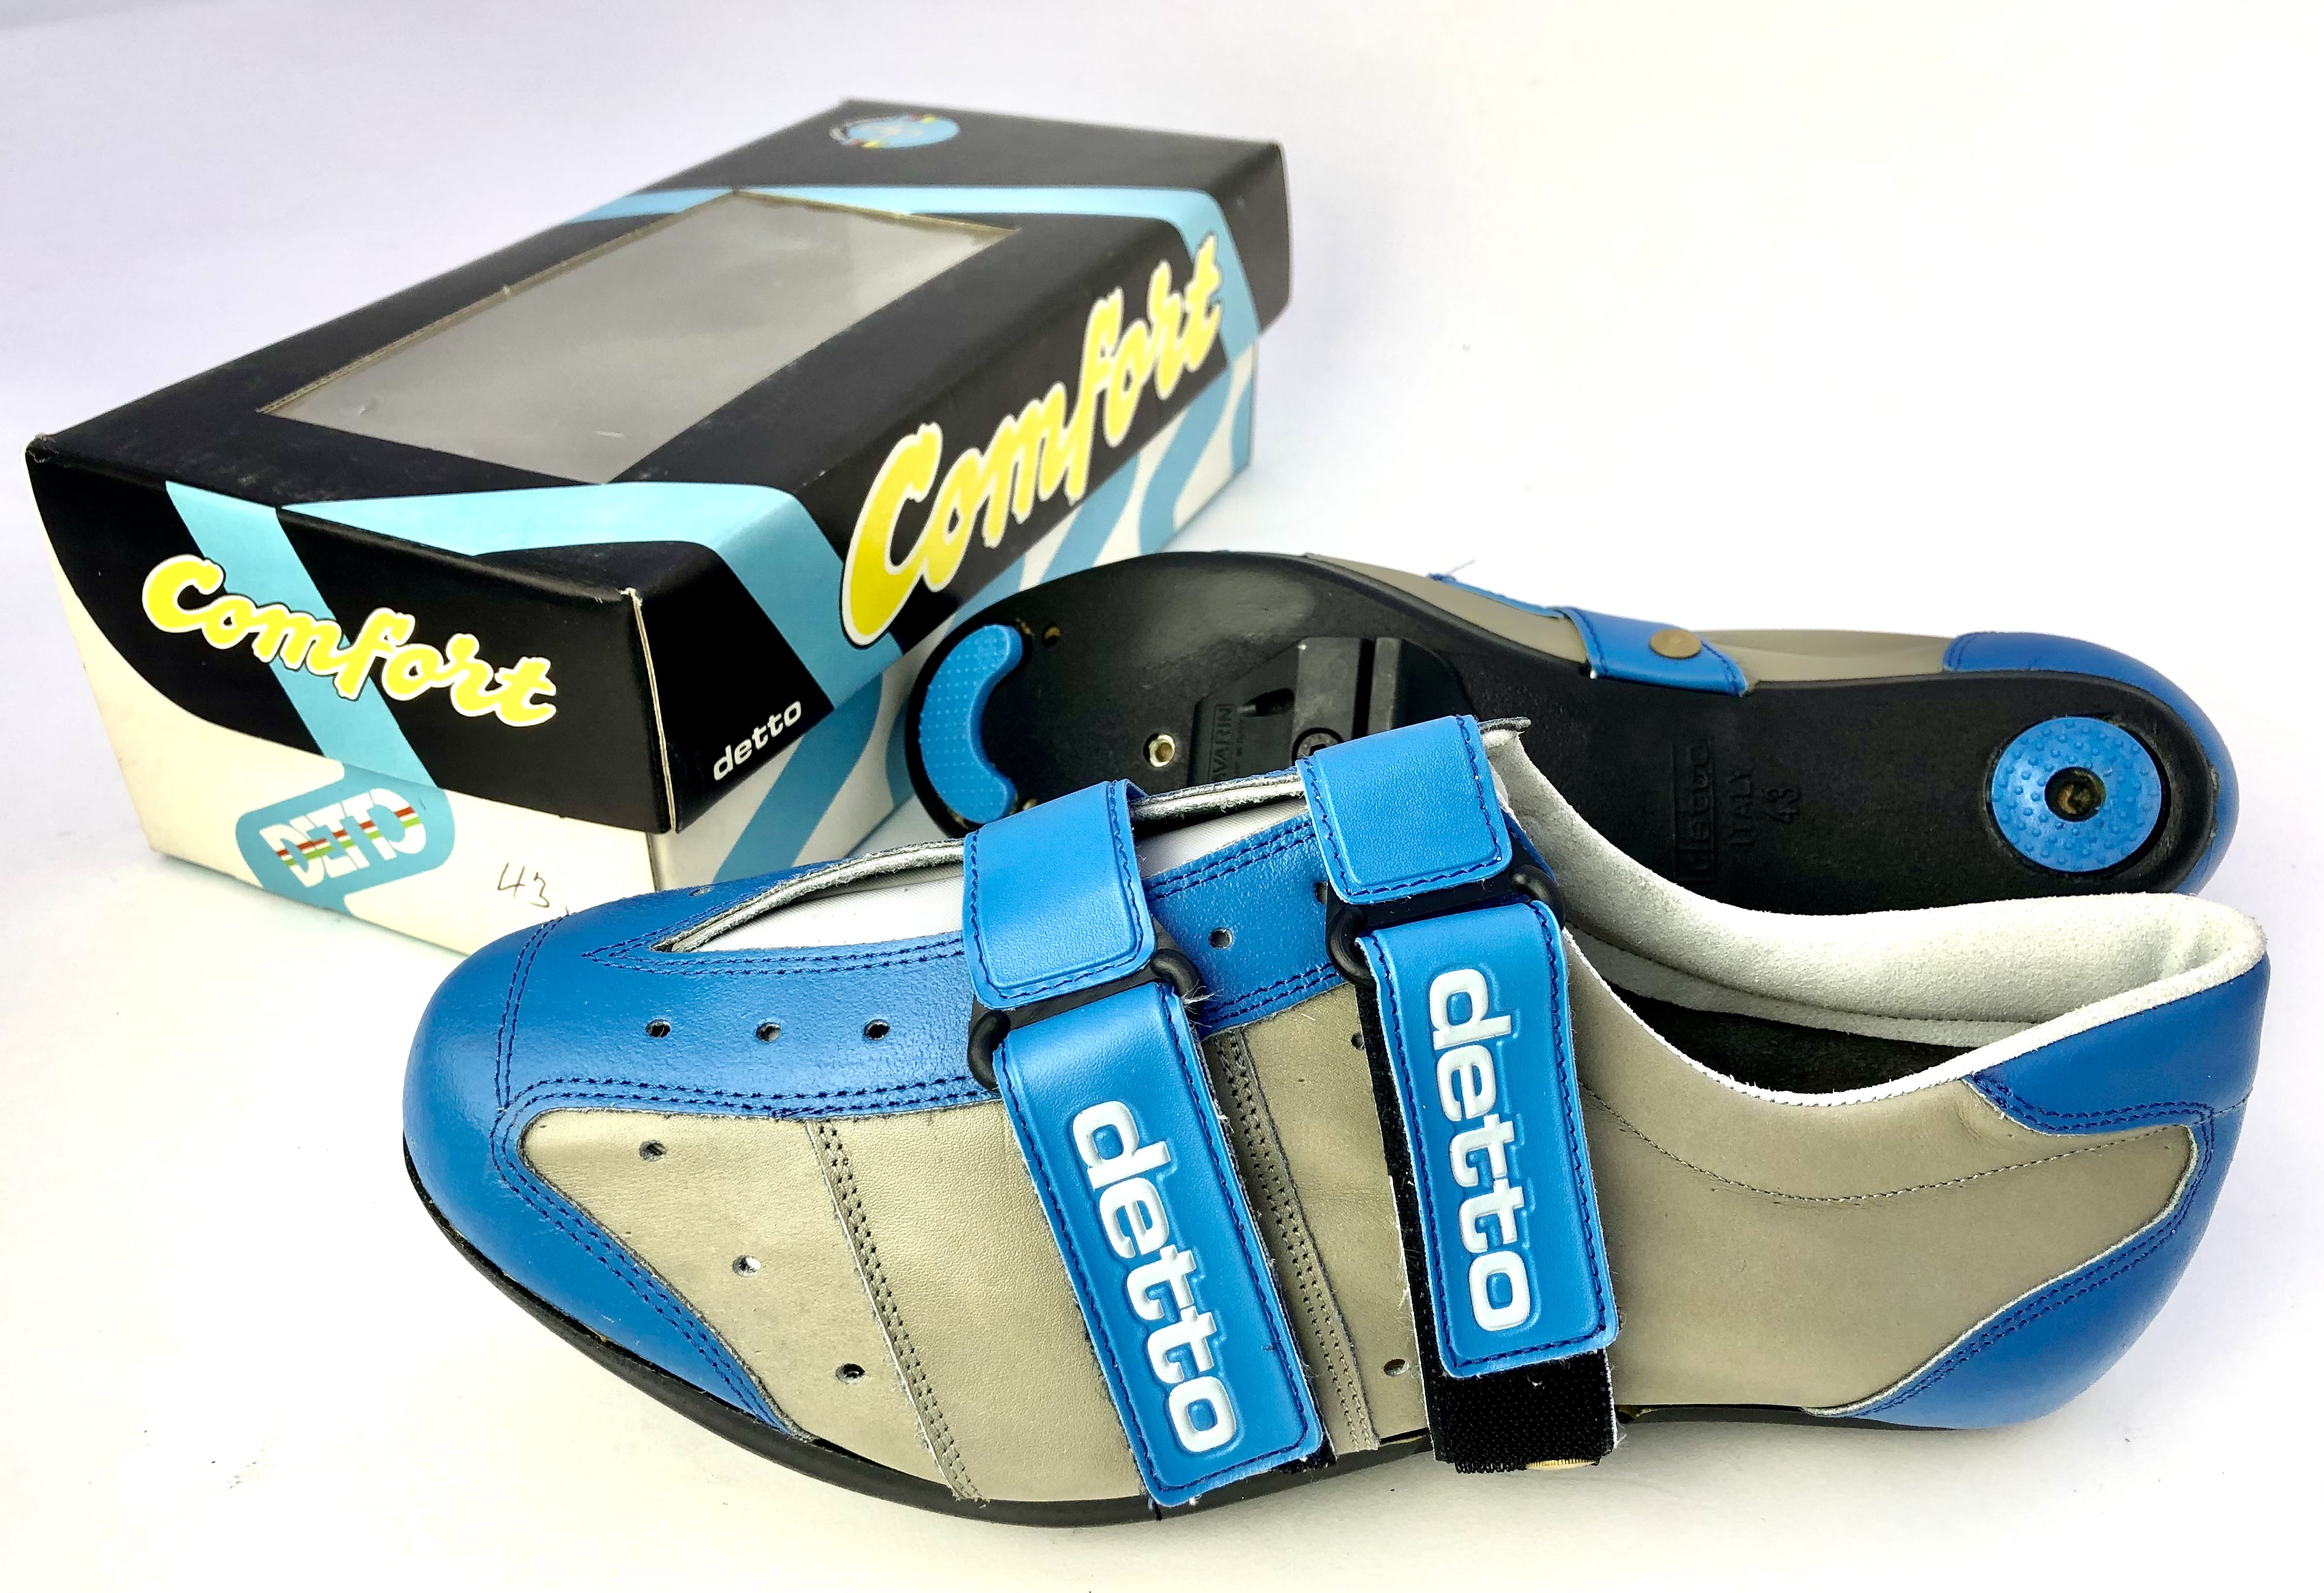 NOS Vintage Detto Pietro Mod. 230 Comfort azul Cycling Shoes Size 40